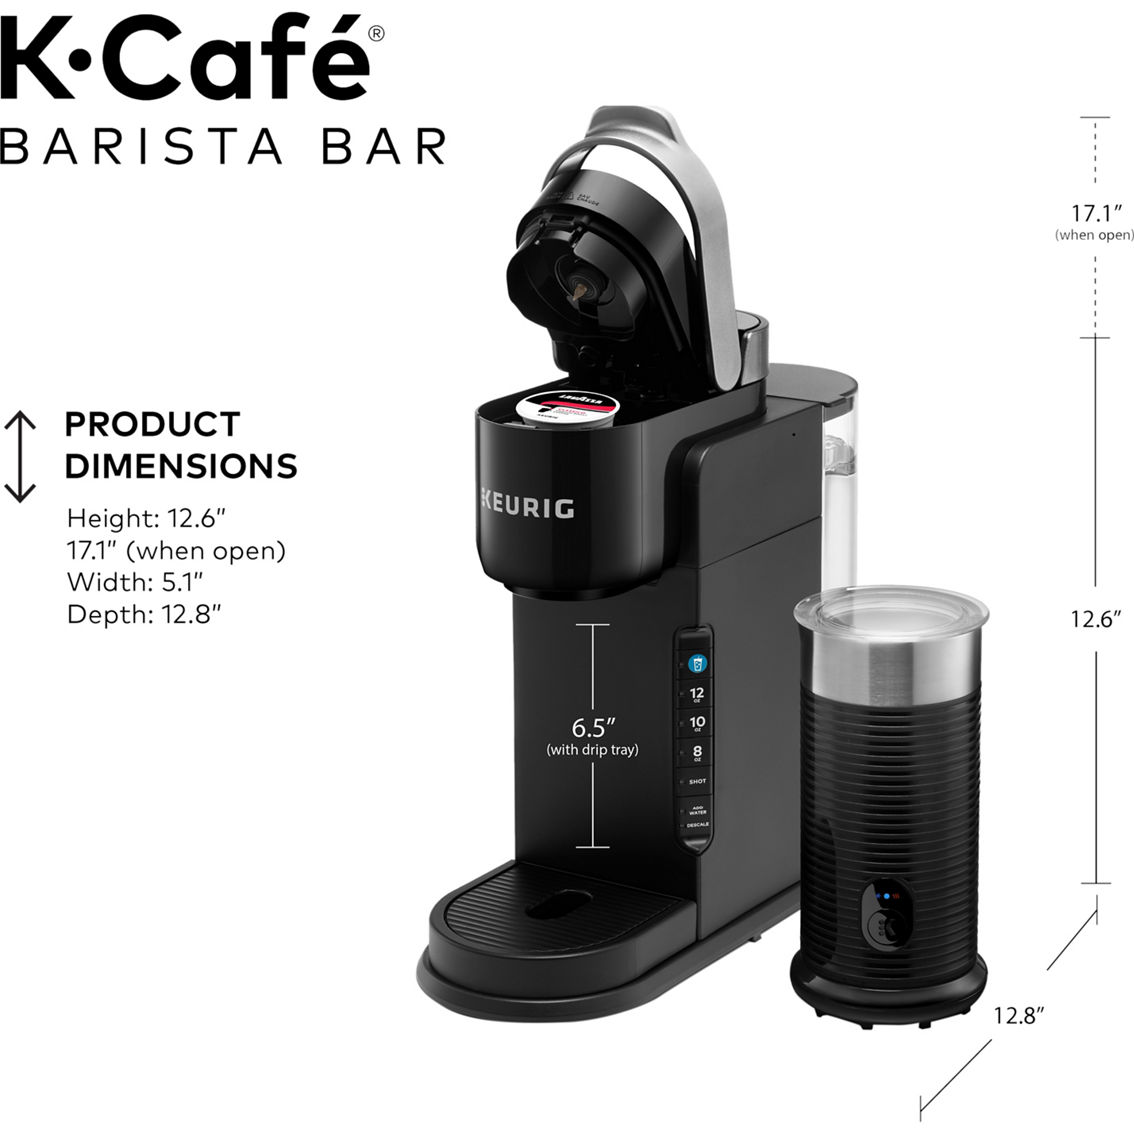 Keurig K-Cafe Barista Bar Single Serve Coffee Maker and Frother - Image 2 of 3